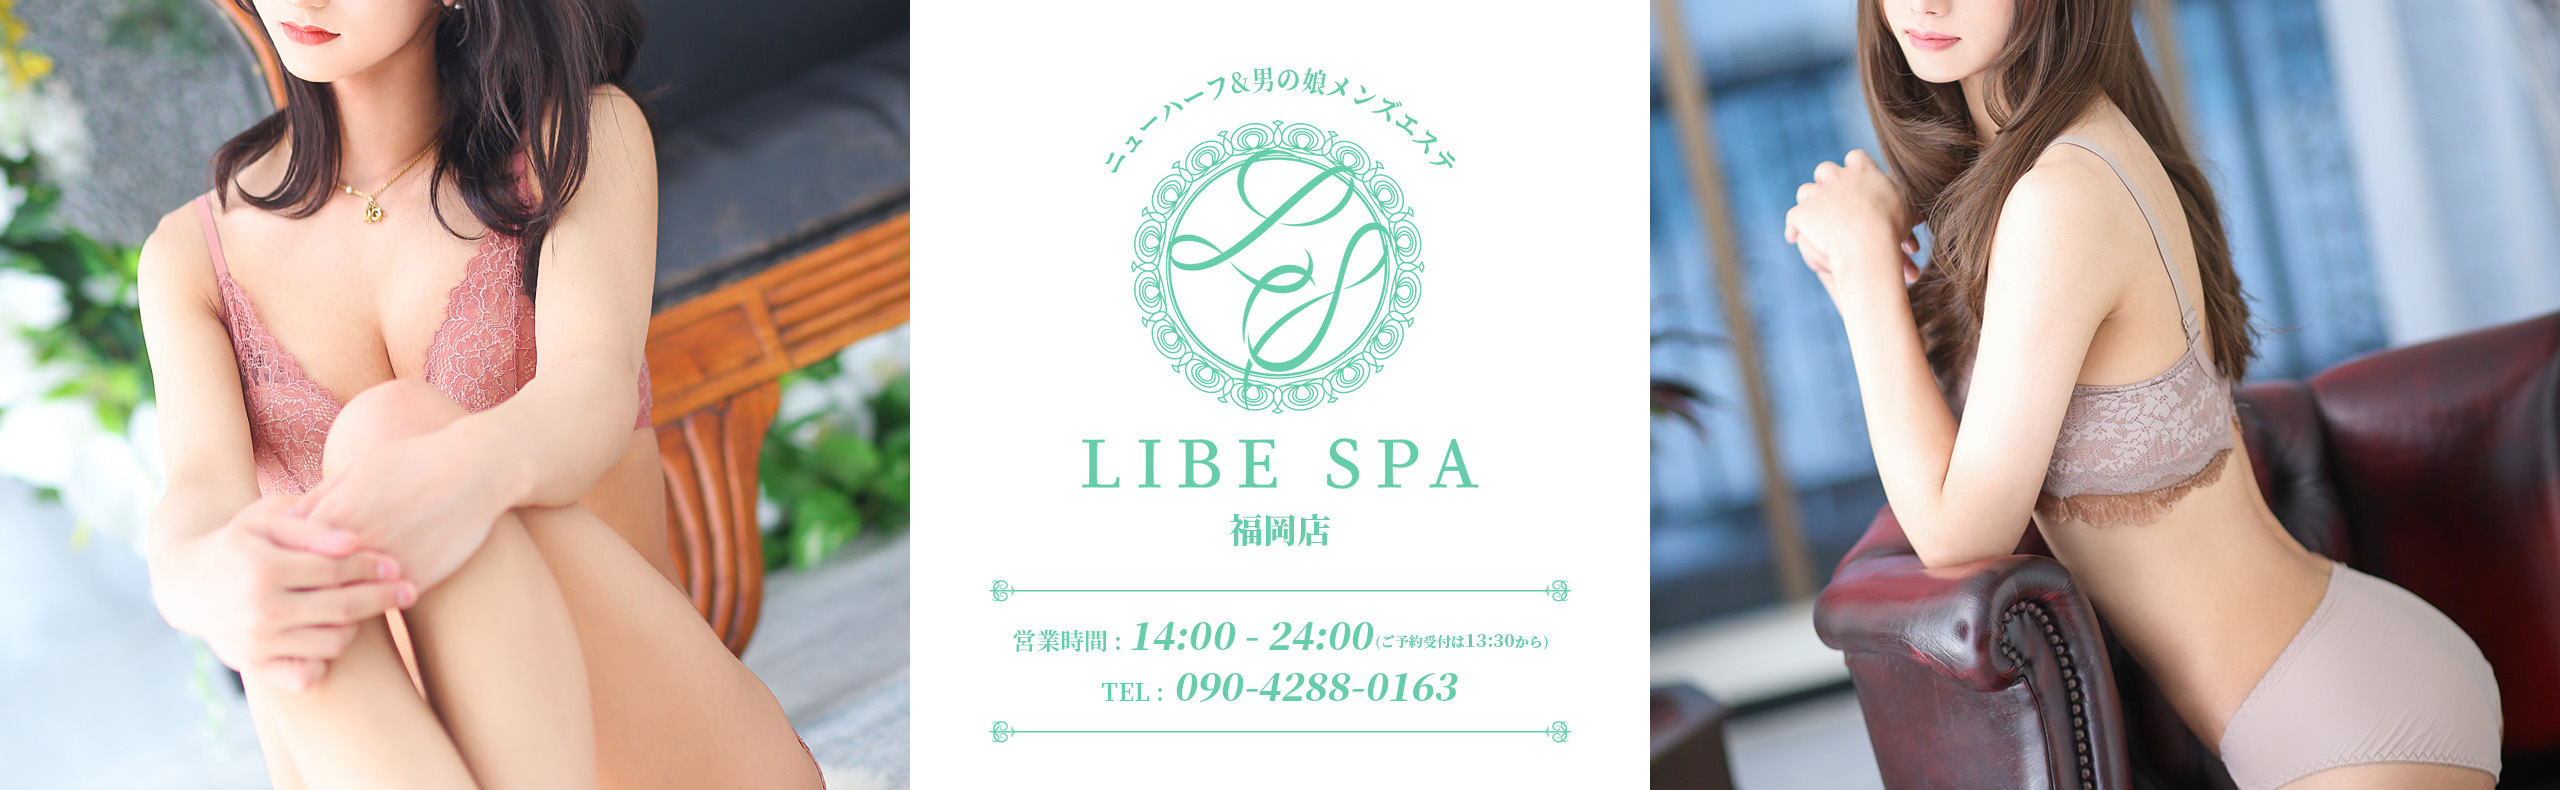 LIBE SPA 九州・広島店メインビジュアル